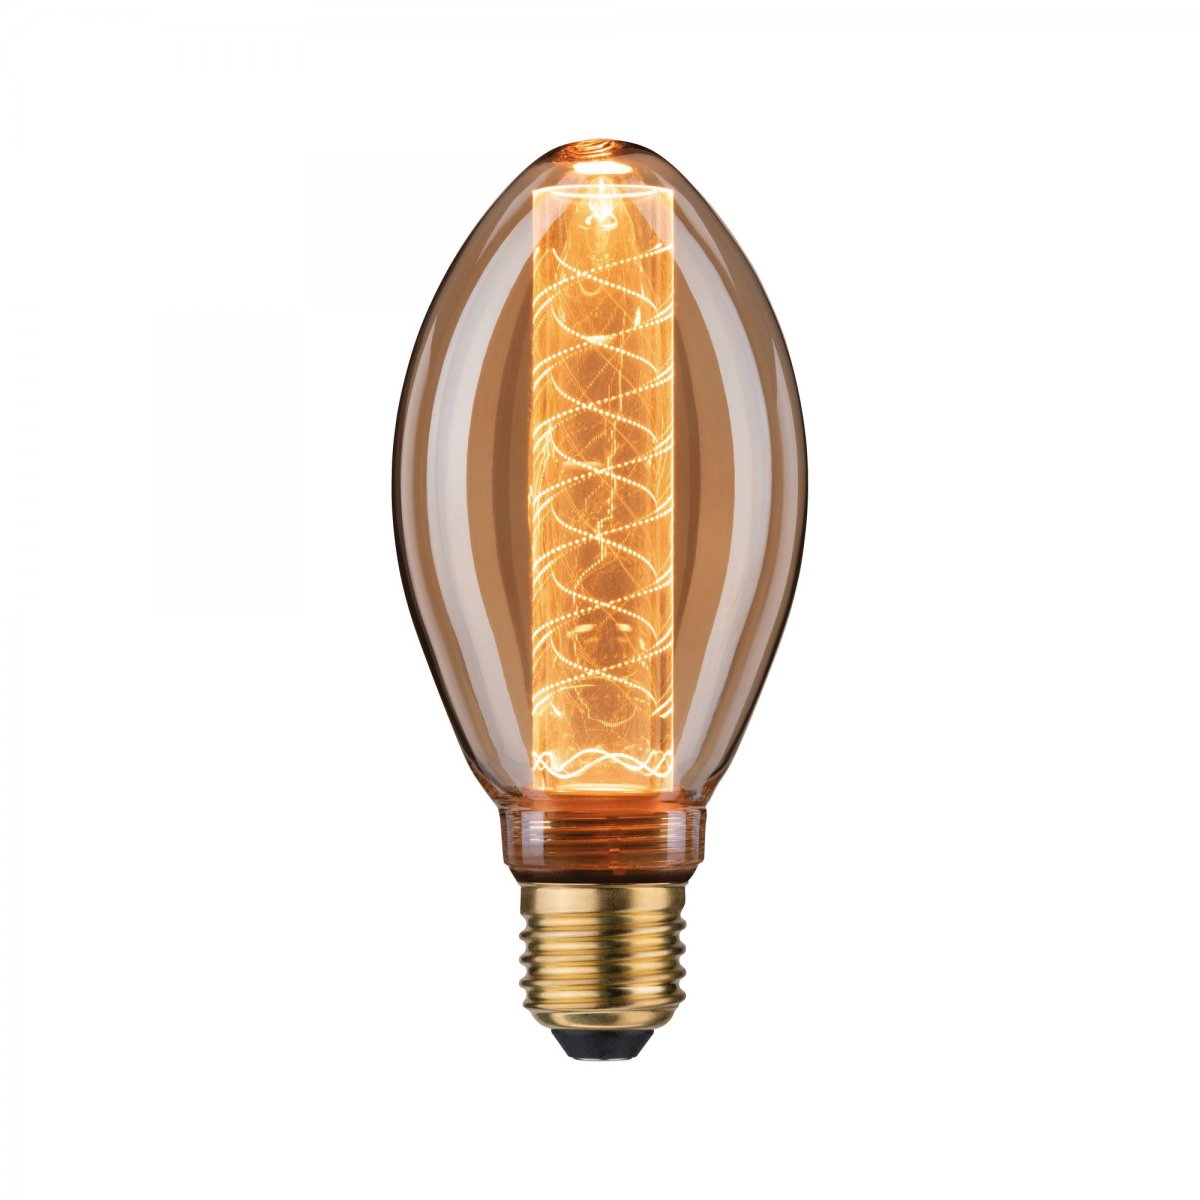 No. Inner Leuchten & kaufen 28827 B75 Gold E27 Spiralmuster Vintage-Birne --> LED Glow online dimmbar Paulmann Lampen